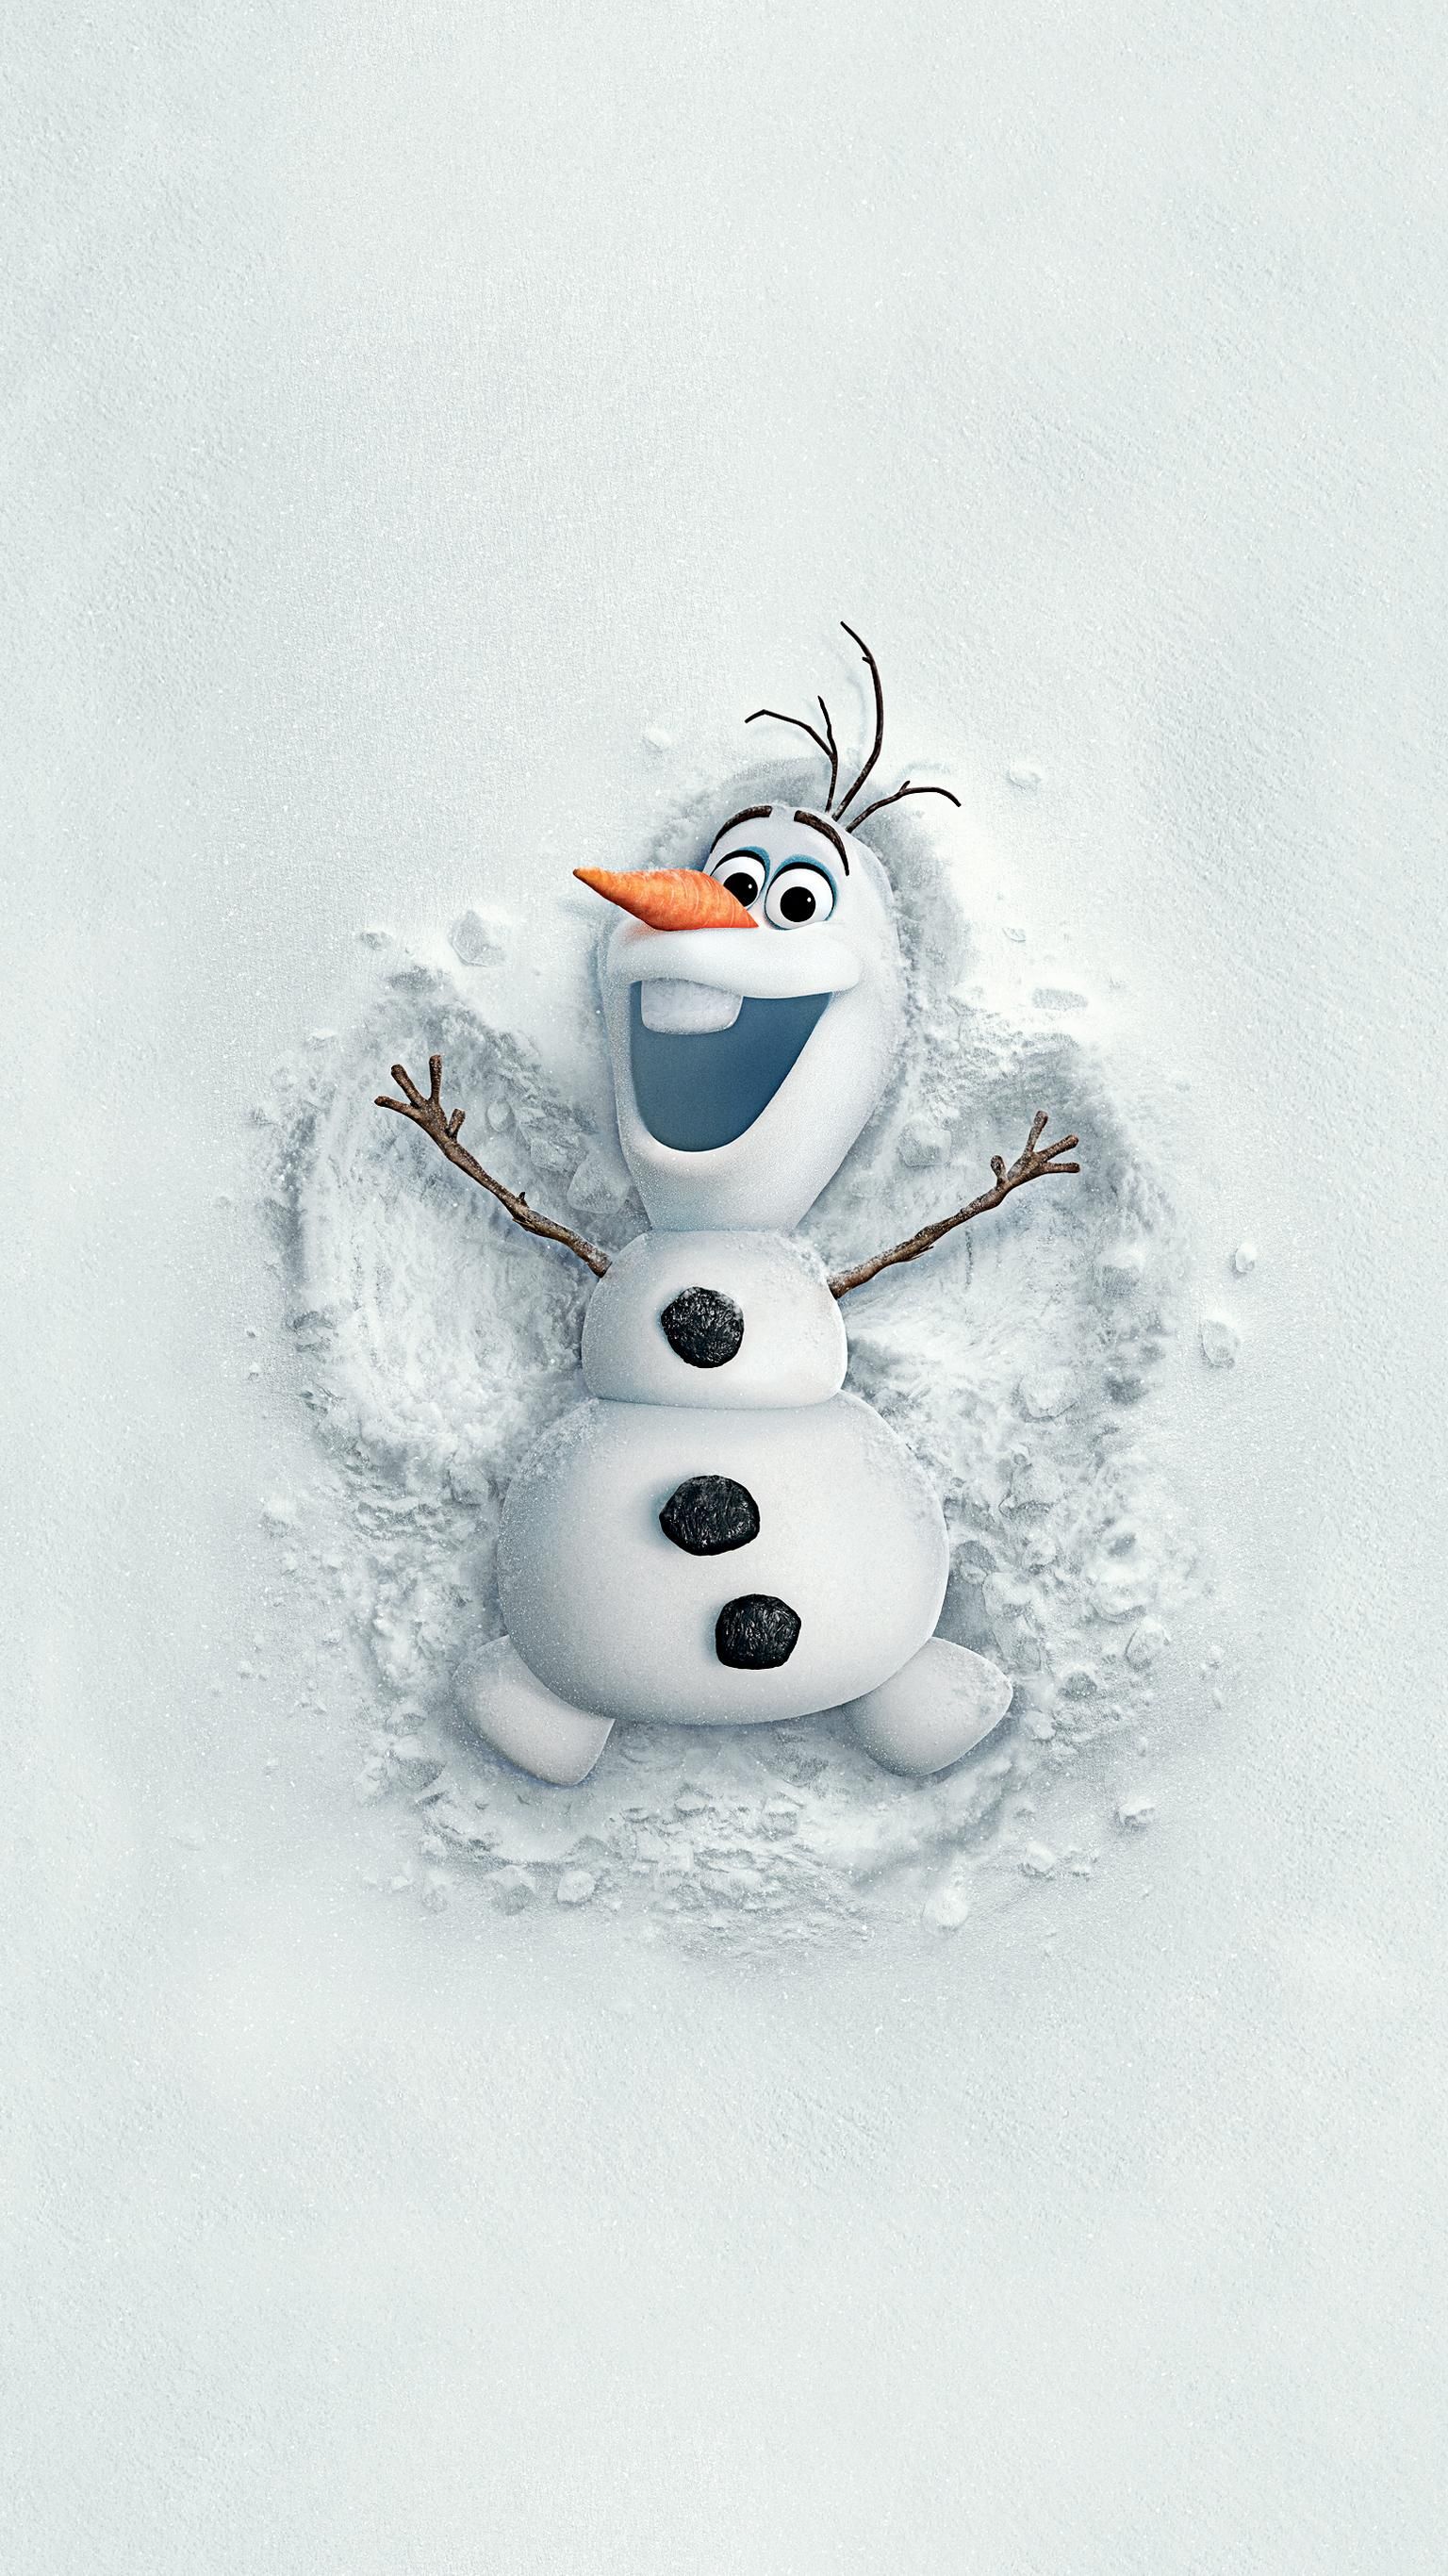 frozen wallpaper for phone,snowman,snow,illustration,fictional character,winter